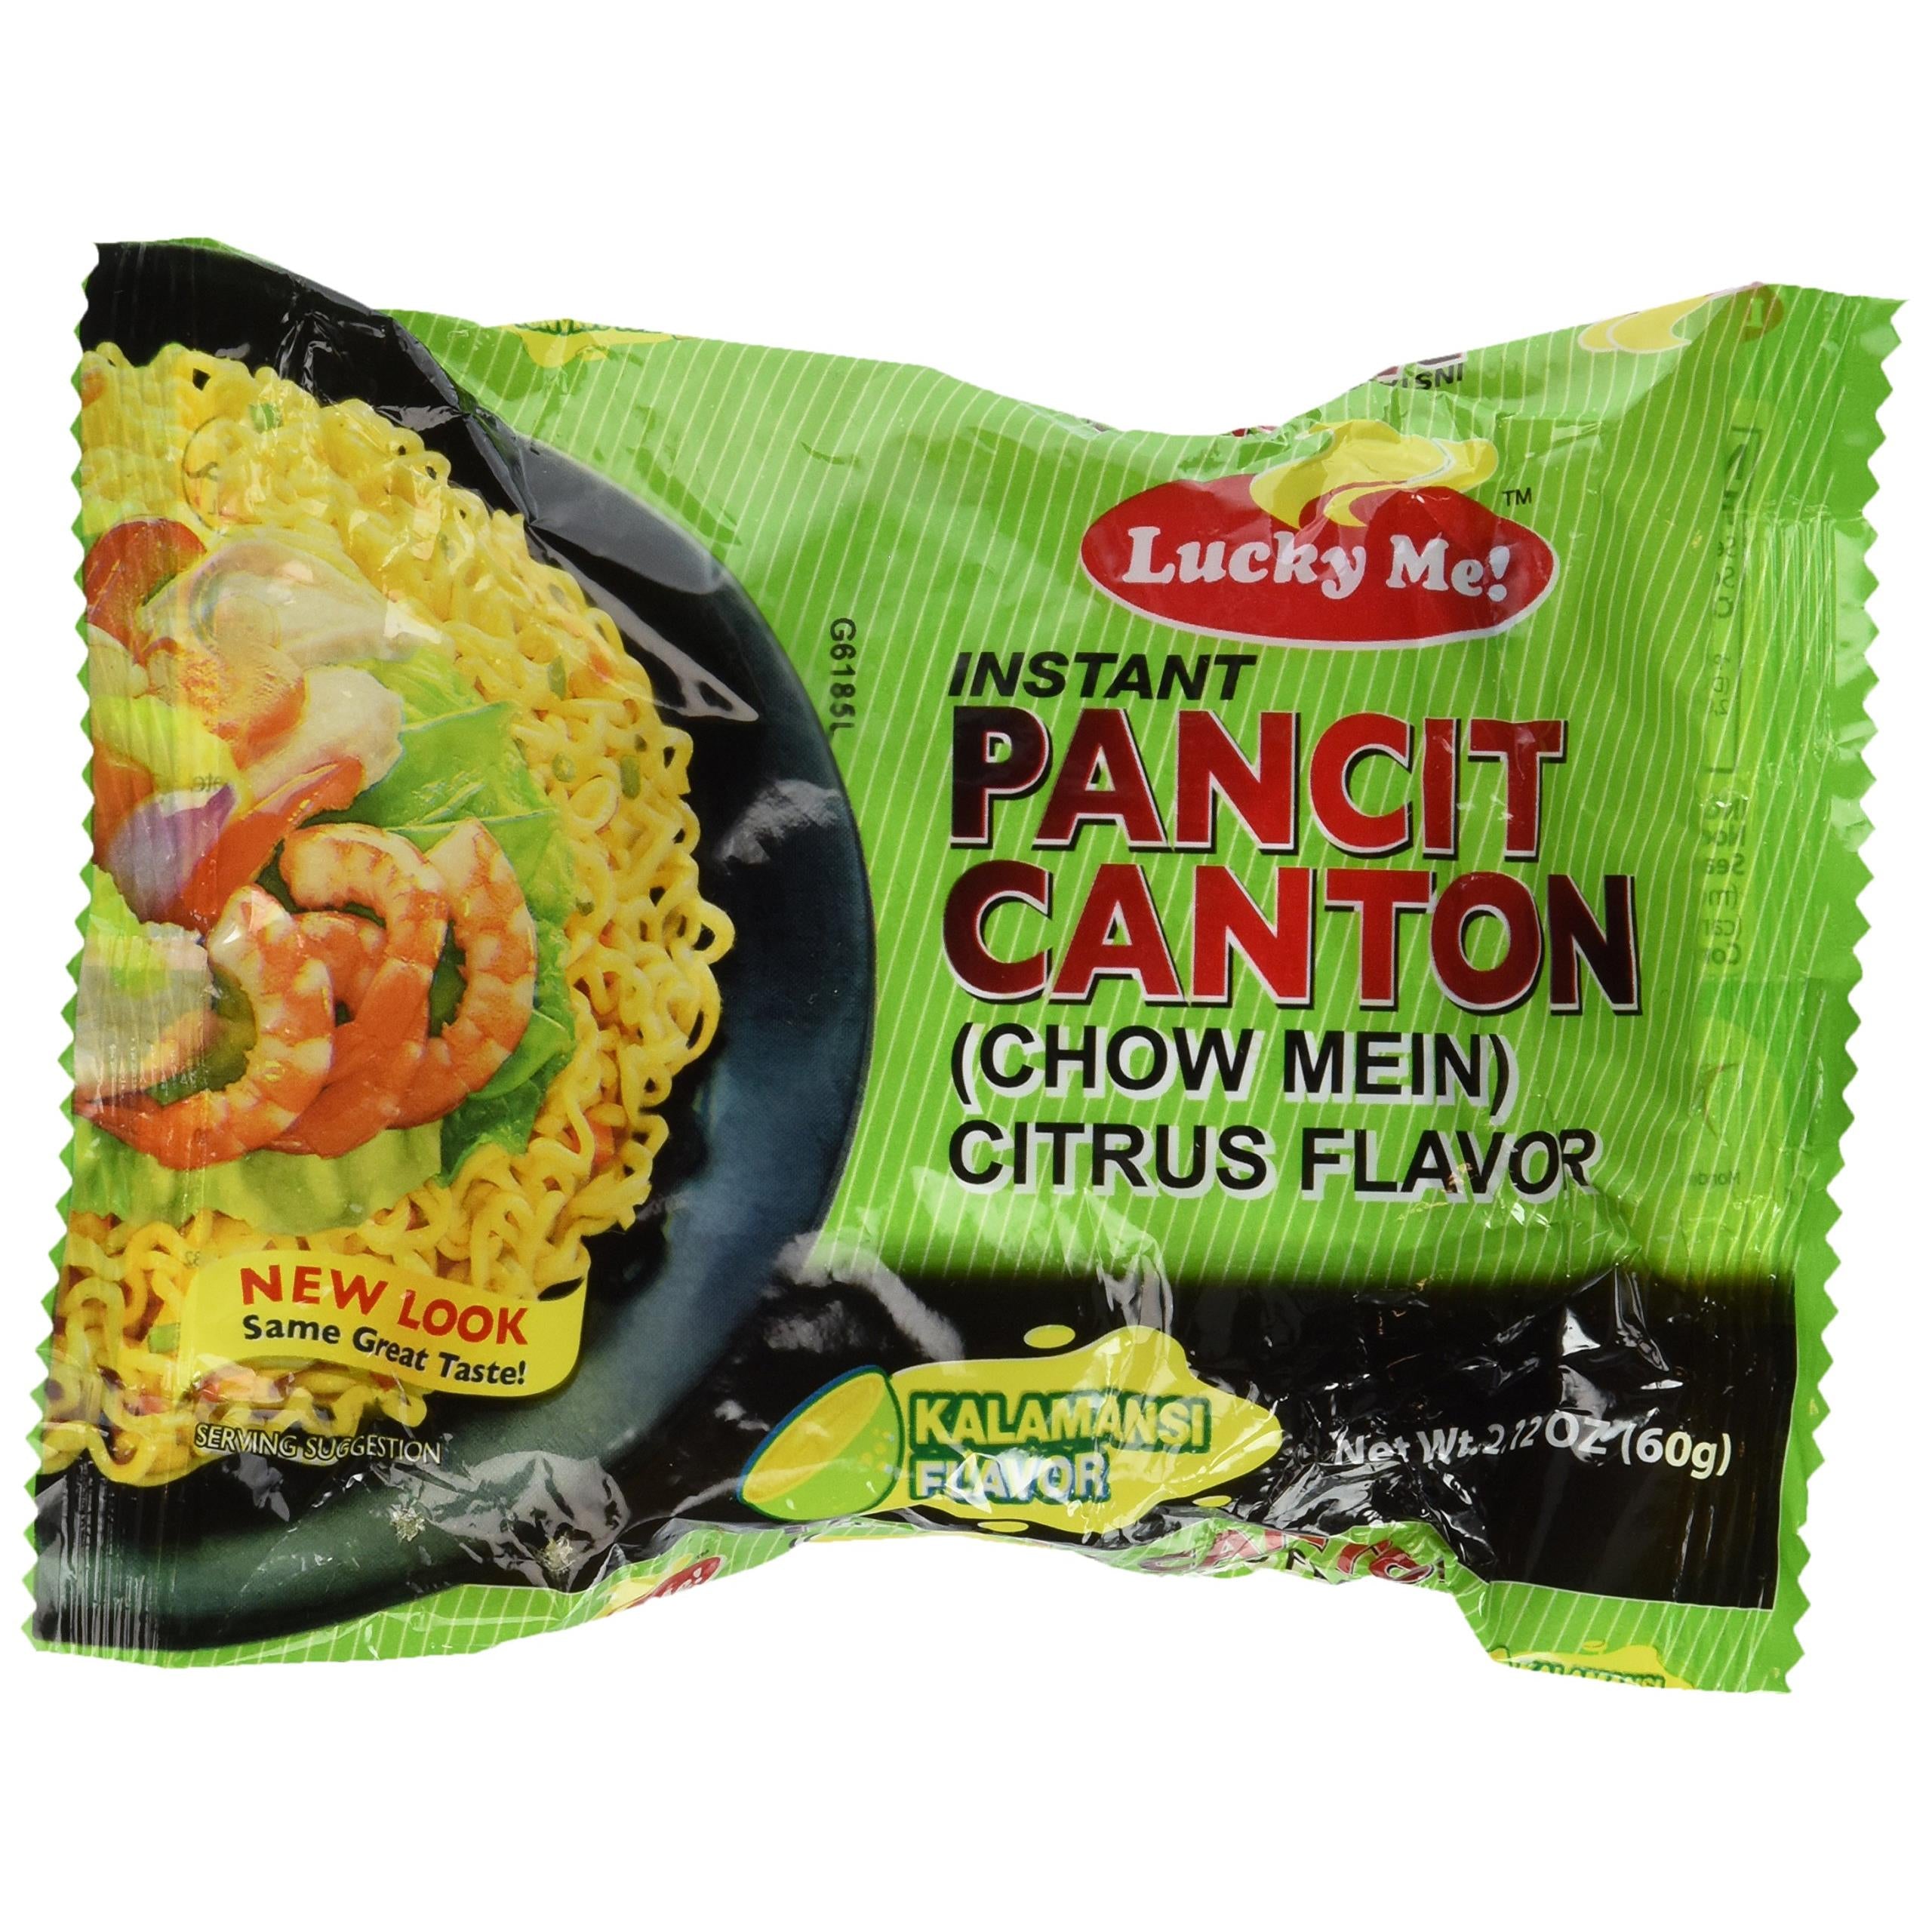 Pancit Canton Citrus Flavor (Kalamansi) Chow Mein - 6 x 2.12 oz by Lucky Me